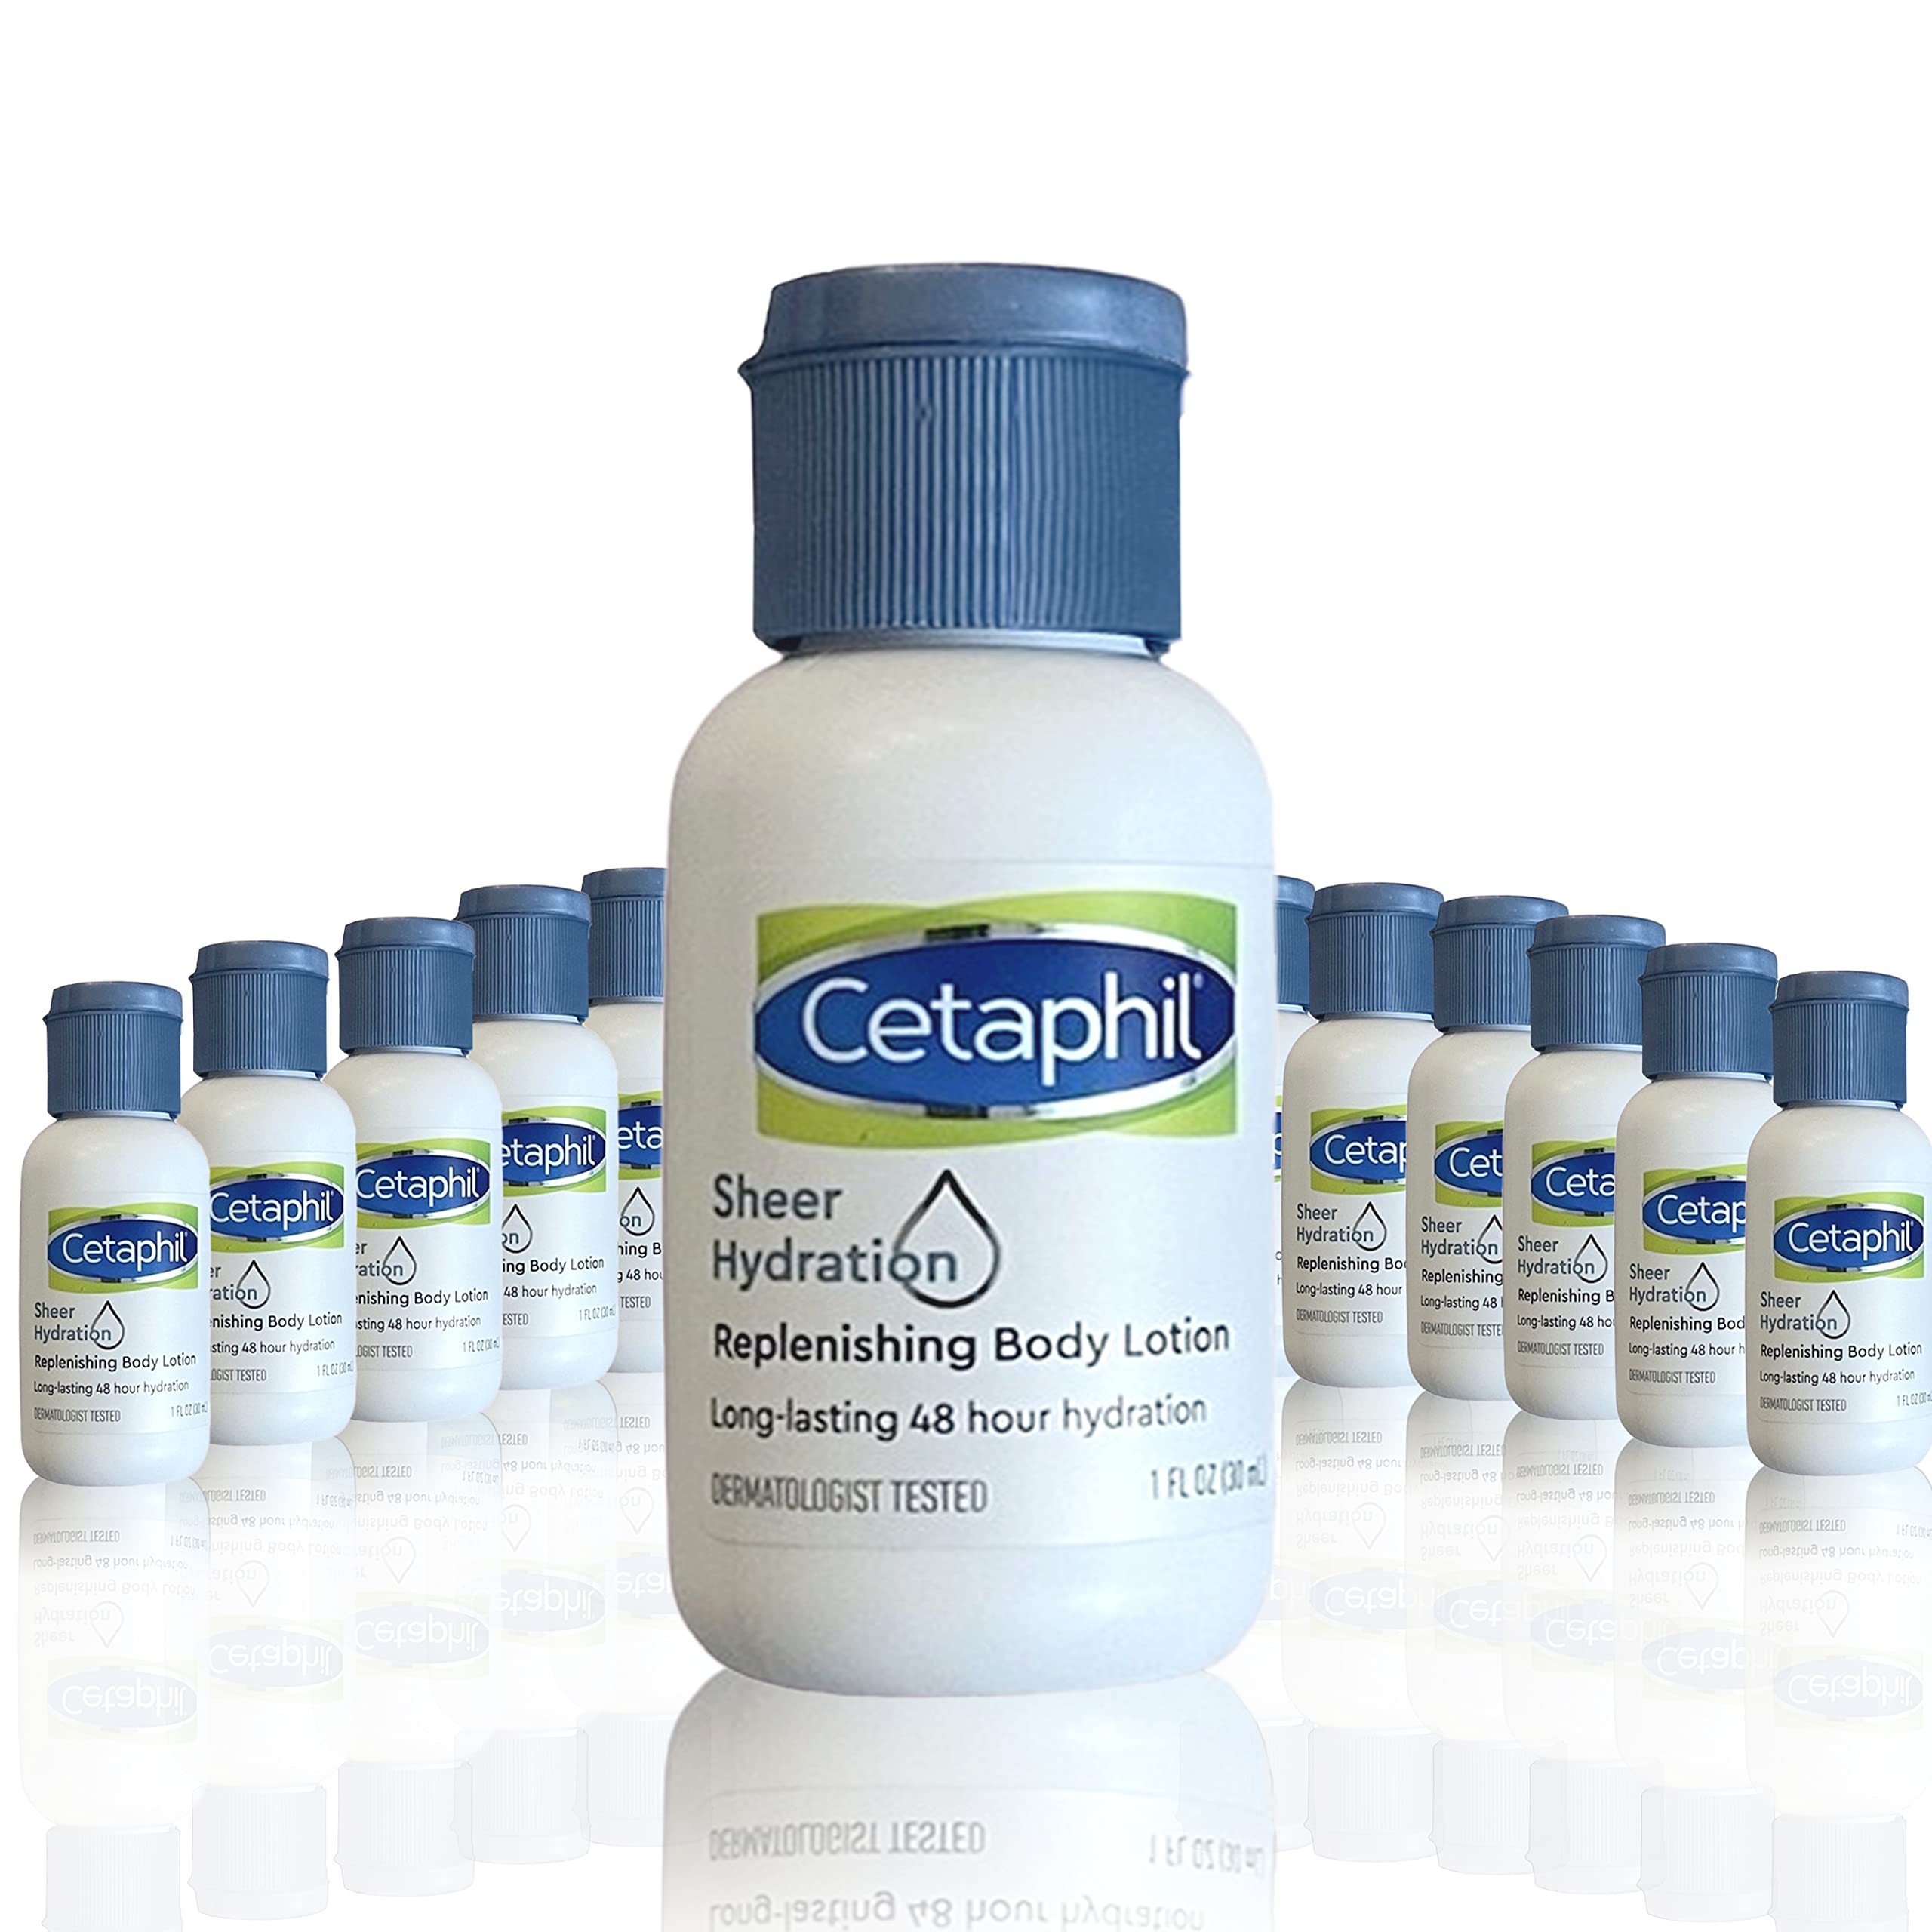 Cetap hil Sheer Hydration Replenishing Body Lotion, Travel Size, 1 Fl Oz, 30 ml, (Pack of 12)